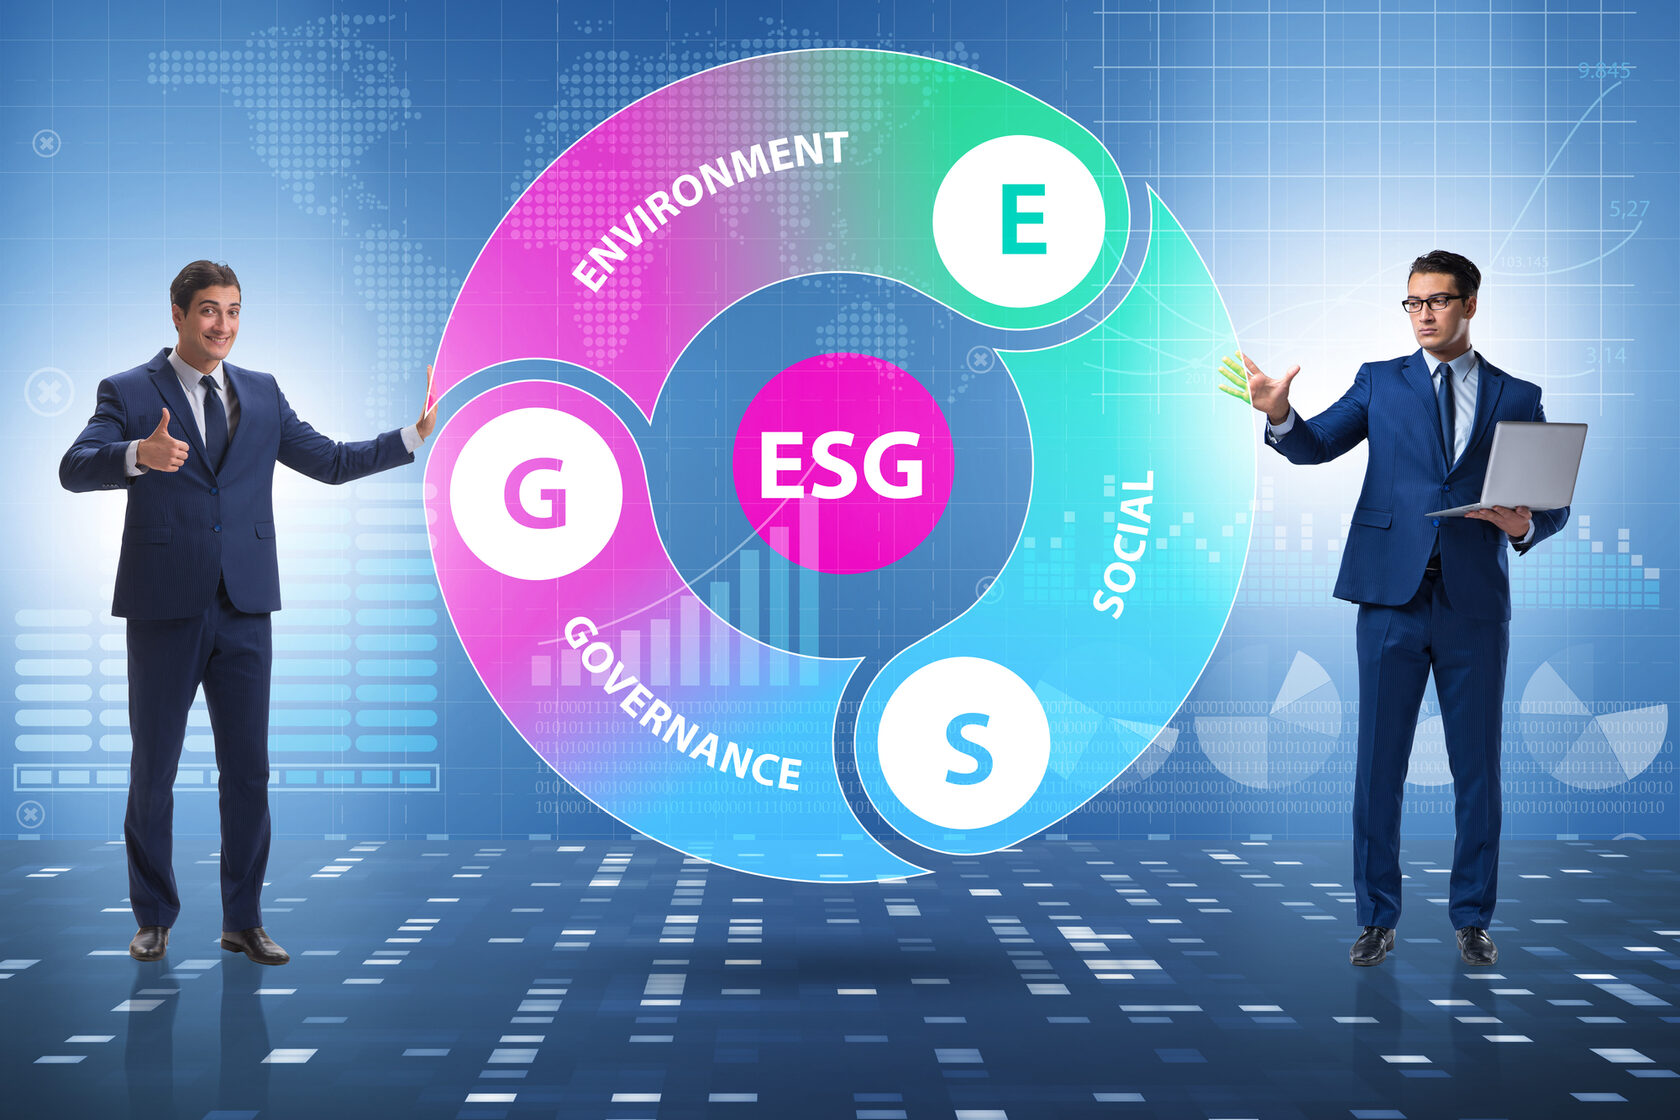 Esg b. ESG. ESG принципы. ESG устойчивое развитие. Инвестирование ESG.